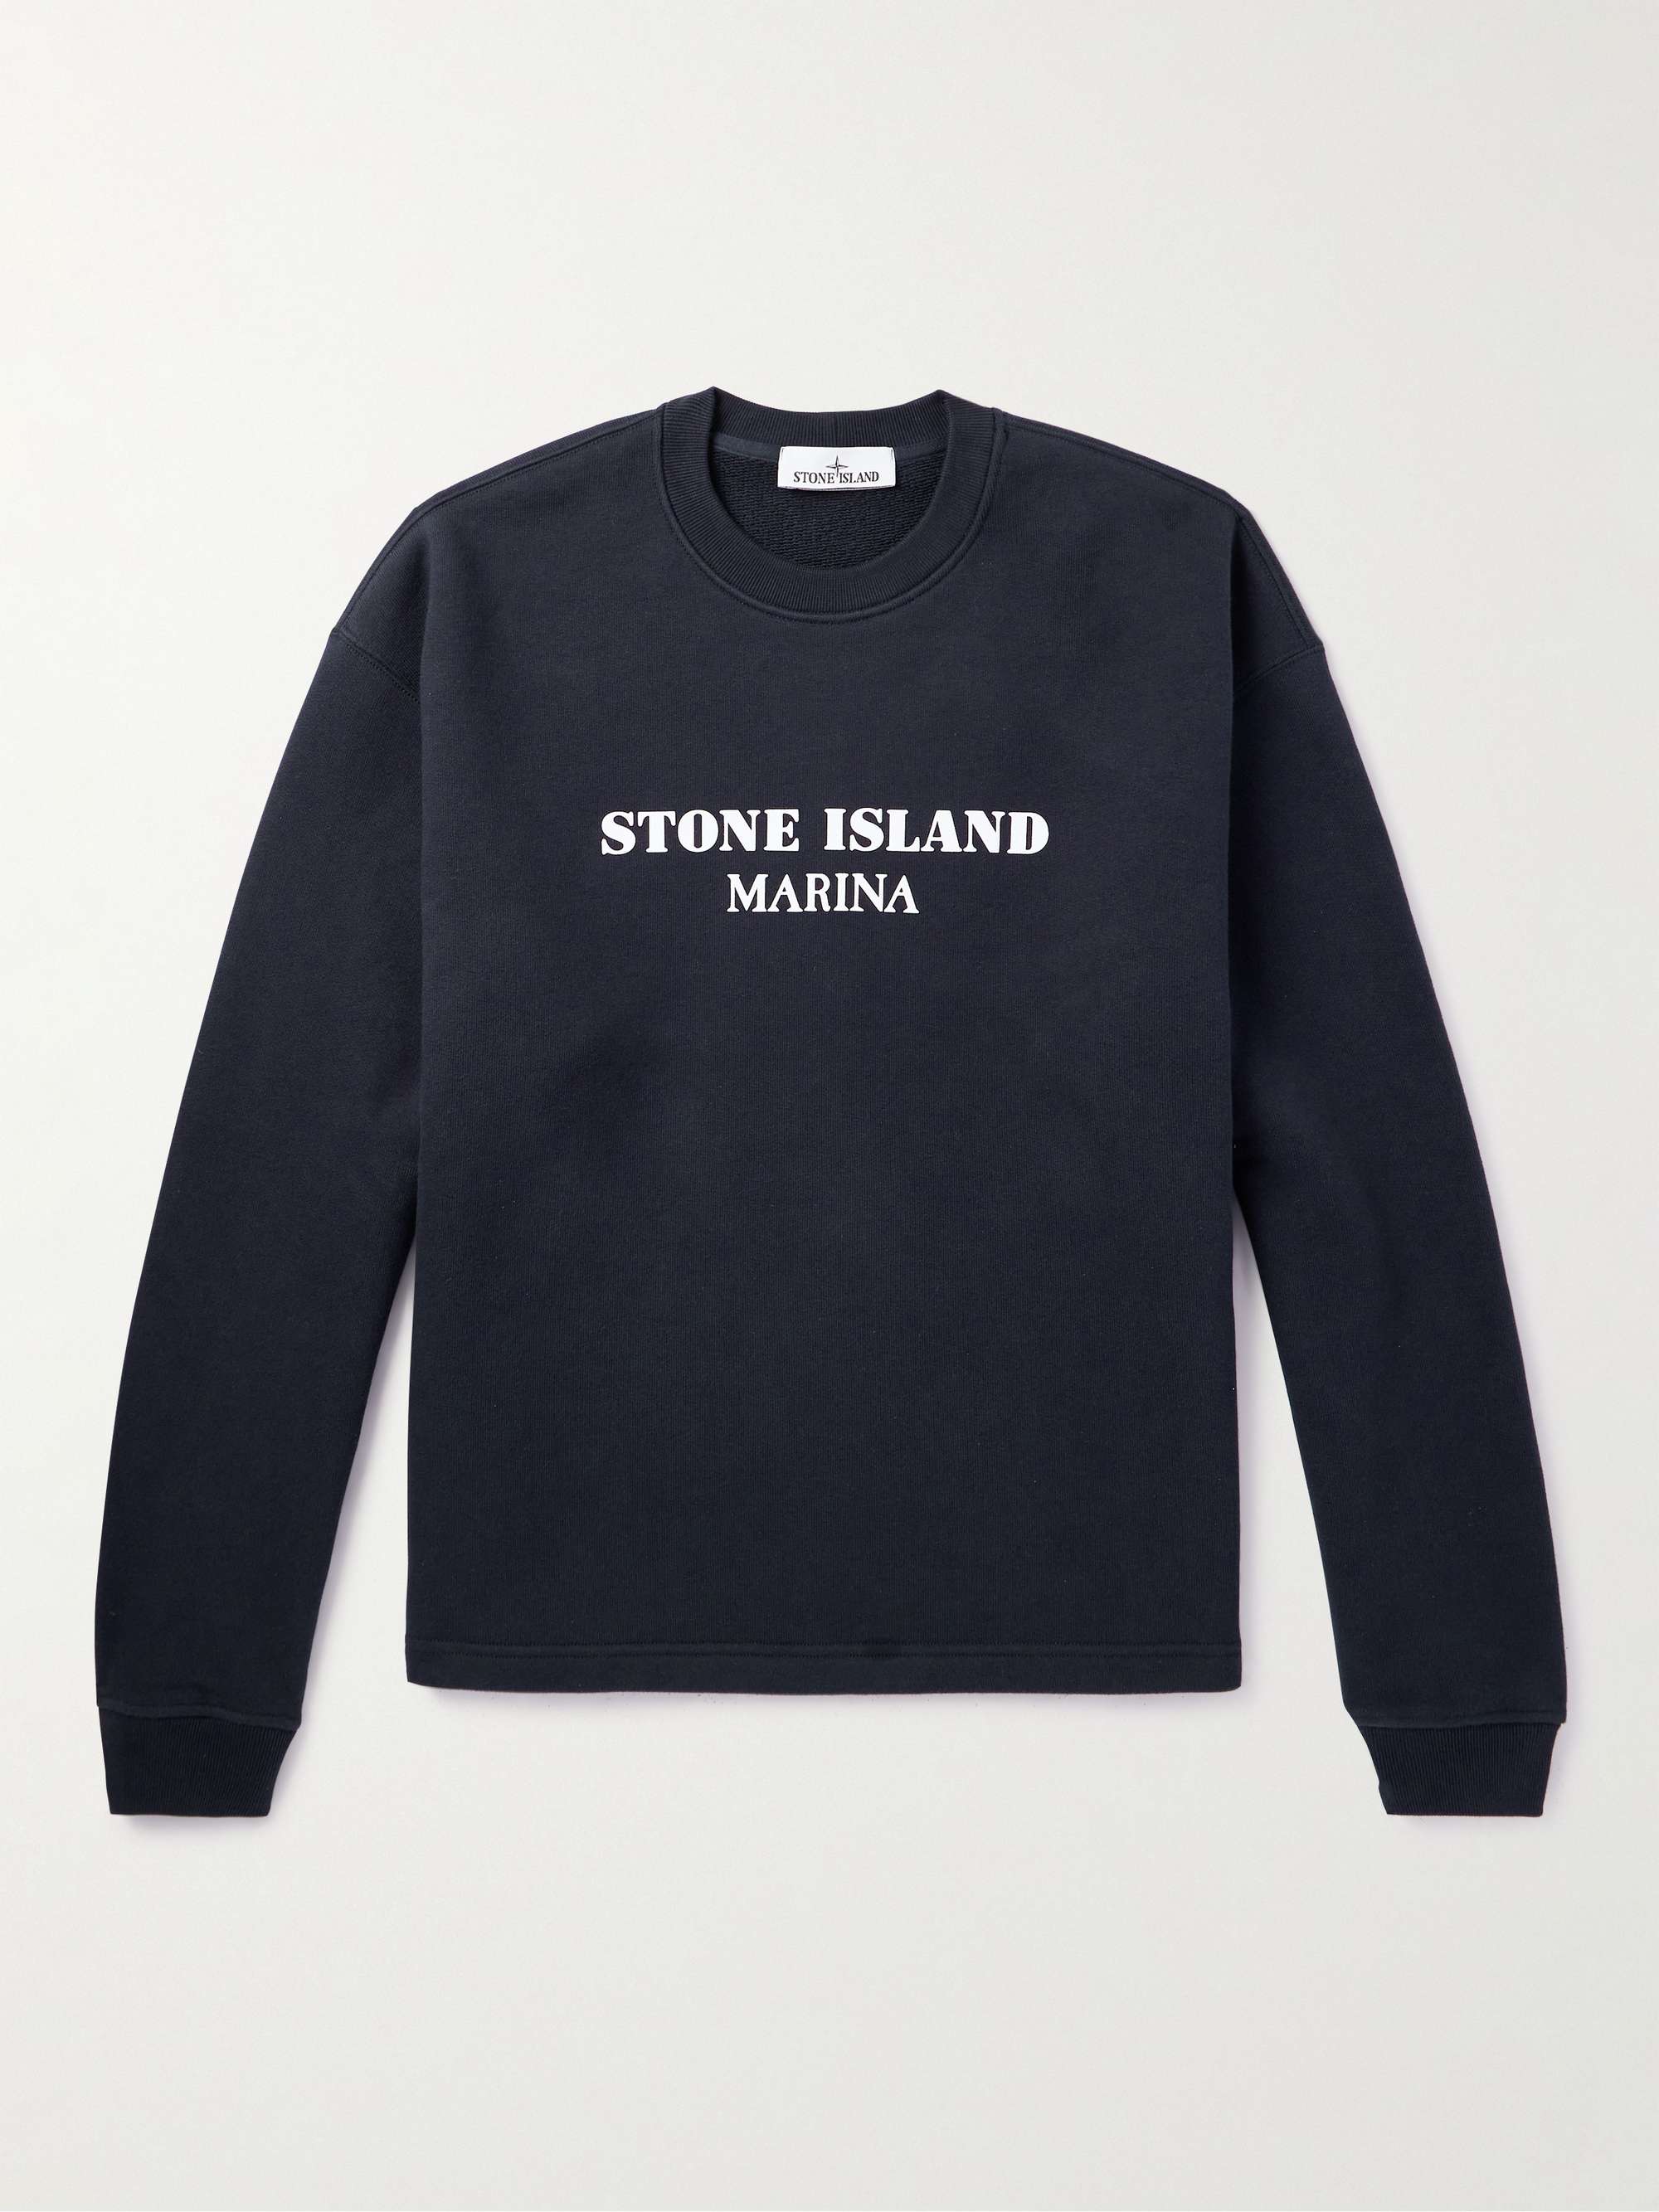 STONE ISLAND Marina Logo-Print Cotton-Jersey Sweatshirt for Men | MR PORTER